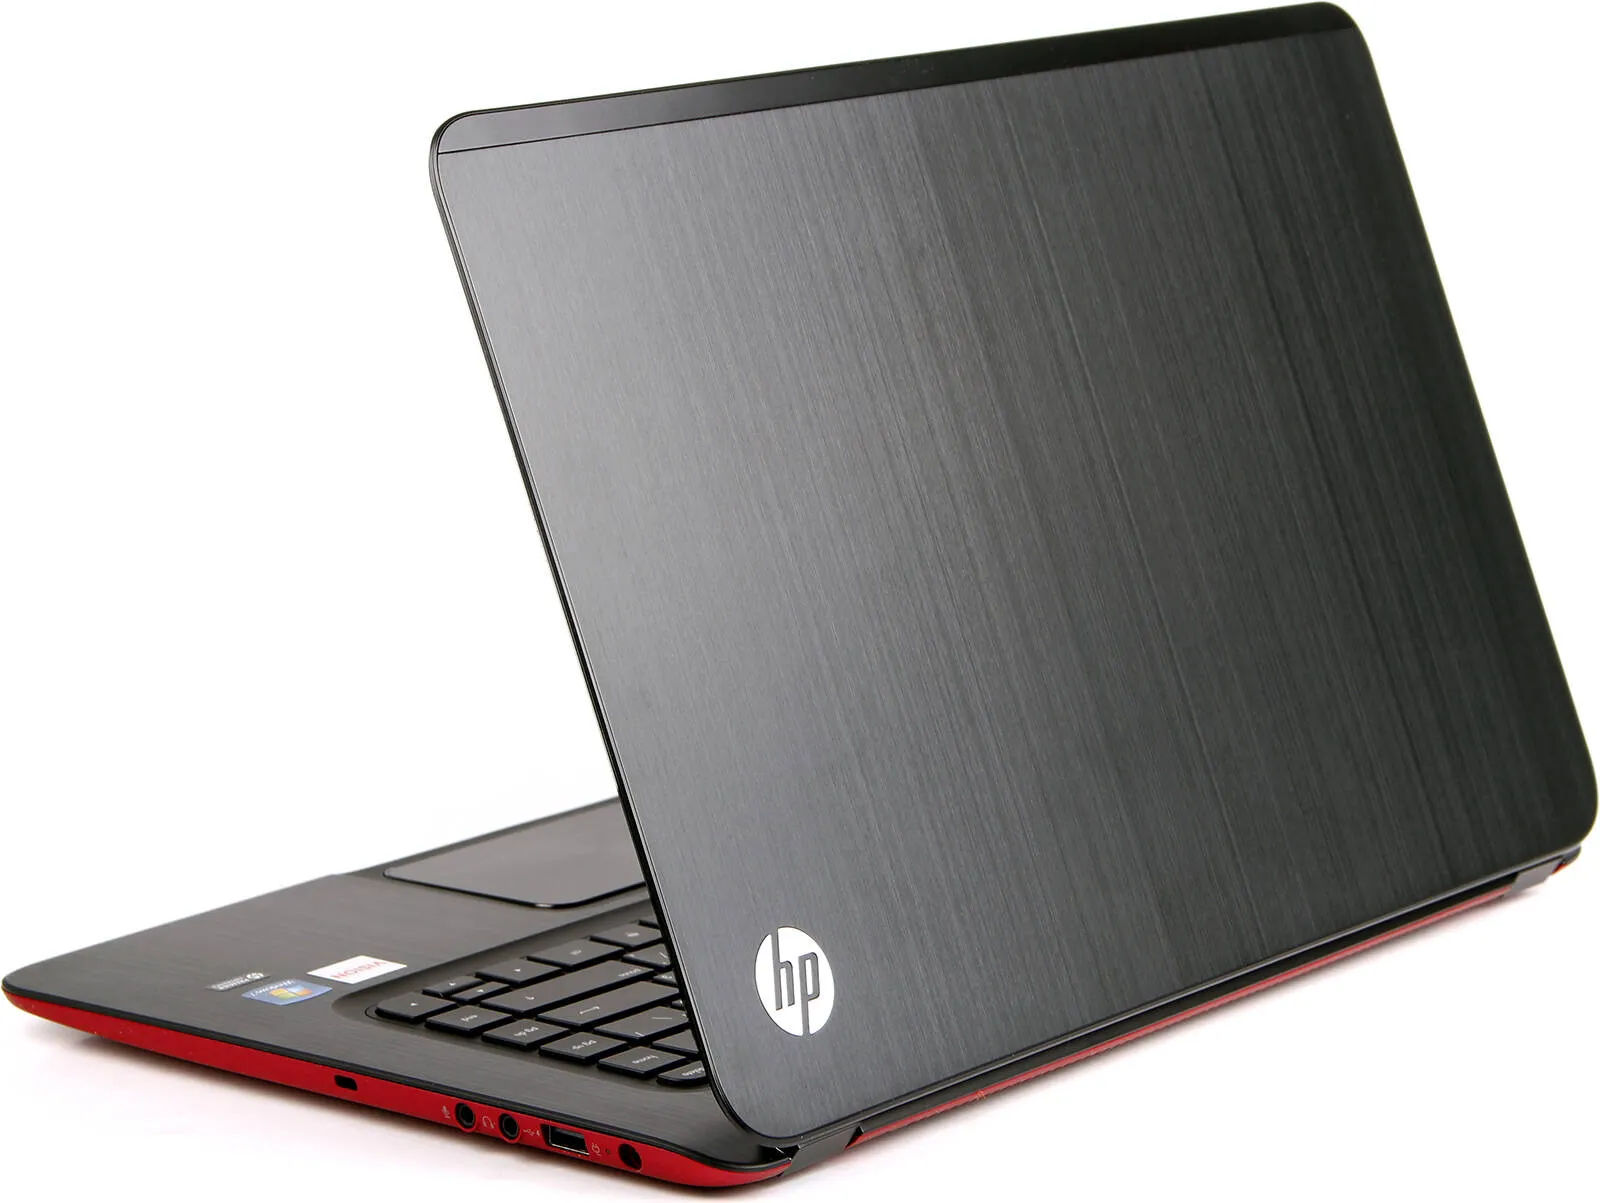 Ноутбук HP 250 G6 /Celeron 3060/4 GB DDR3/ 500GB HDD /15.6" HD LED/Intel HD Graphics 5500/ DVD / RUS#7